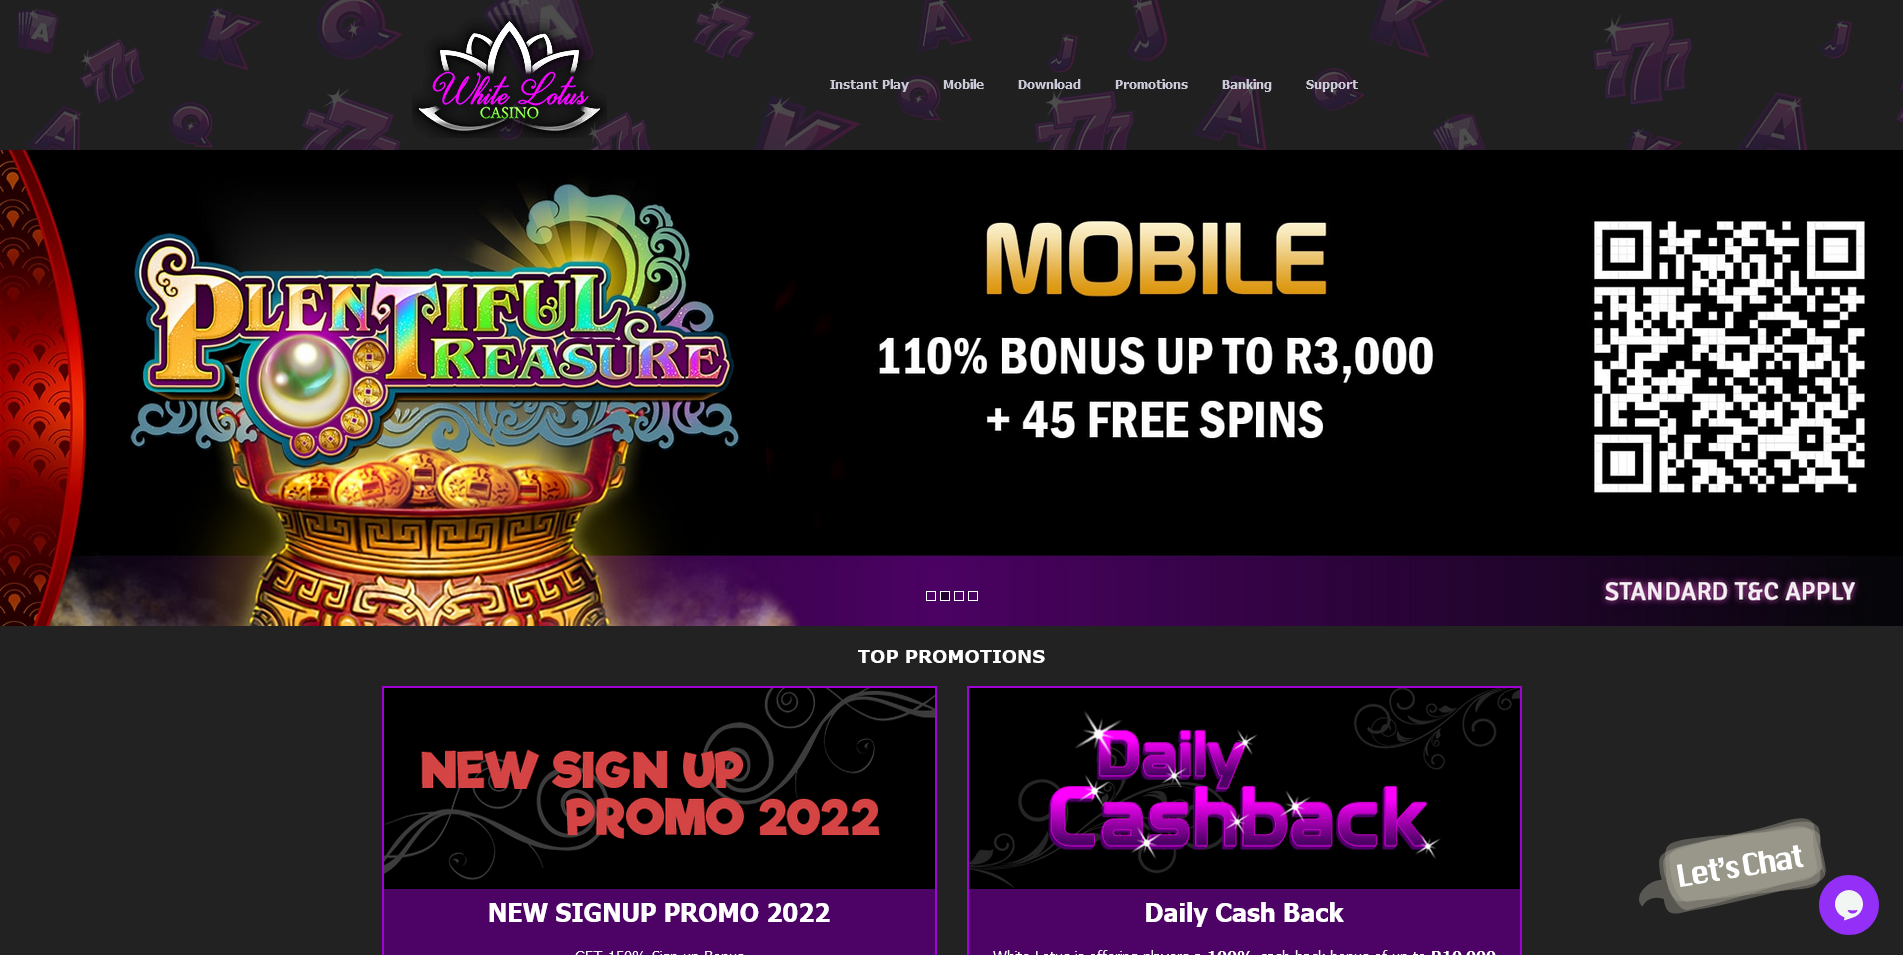 Screenshot of main Page on White Lotus Casino site